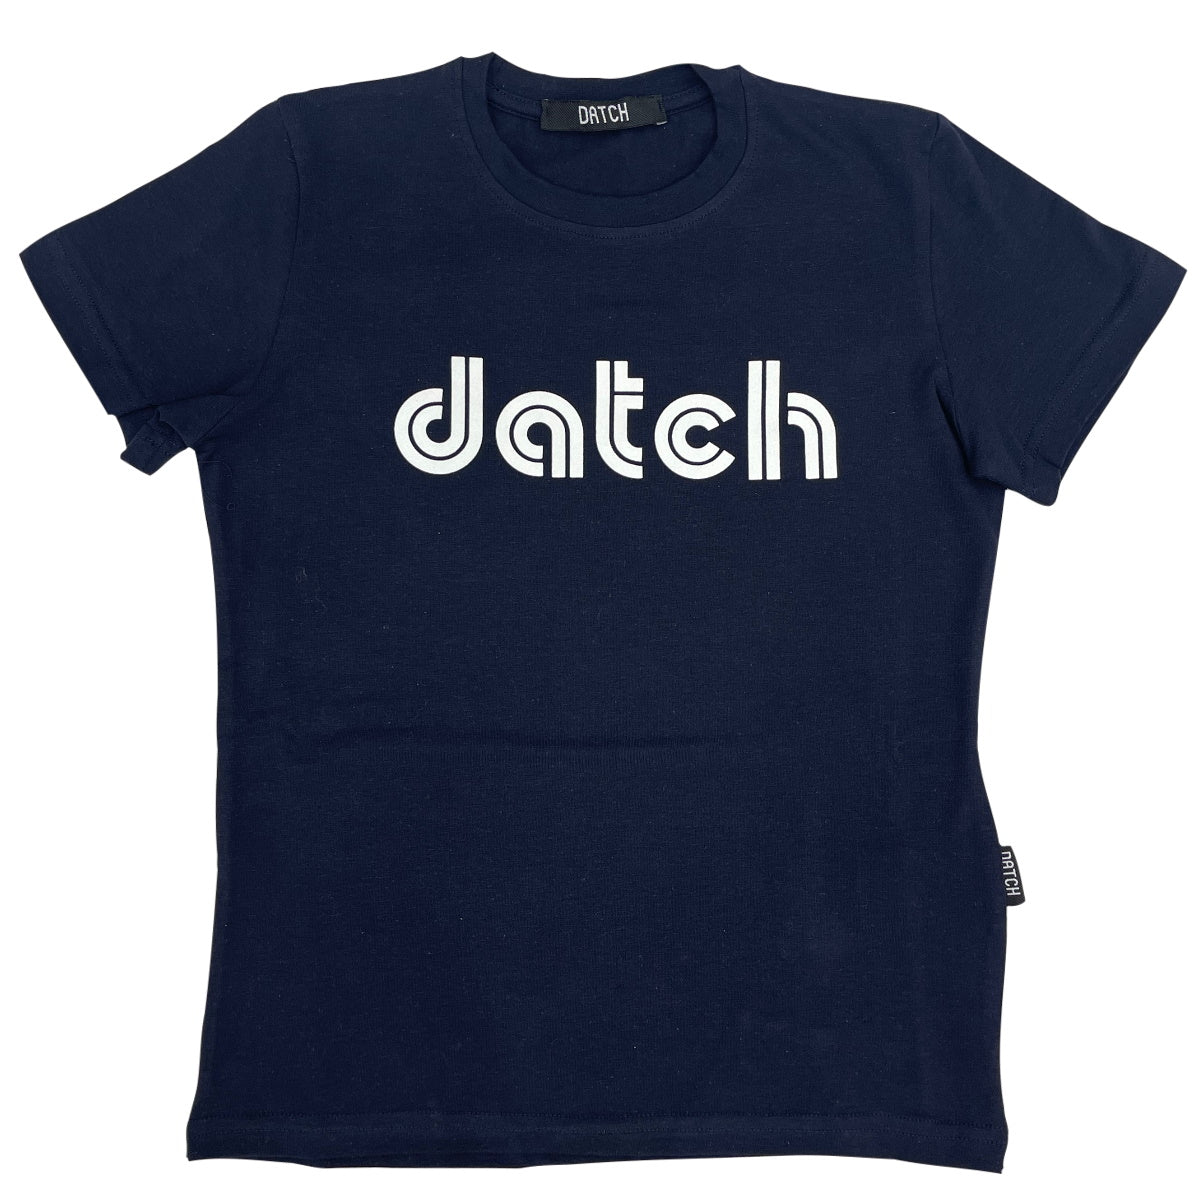 Datch t-shirt bambino in cotone stretch blu